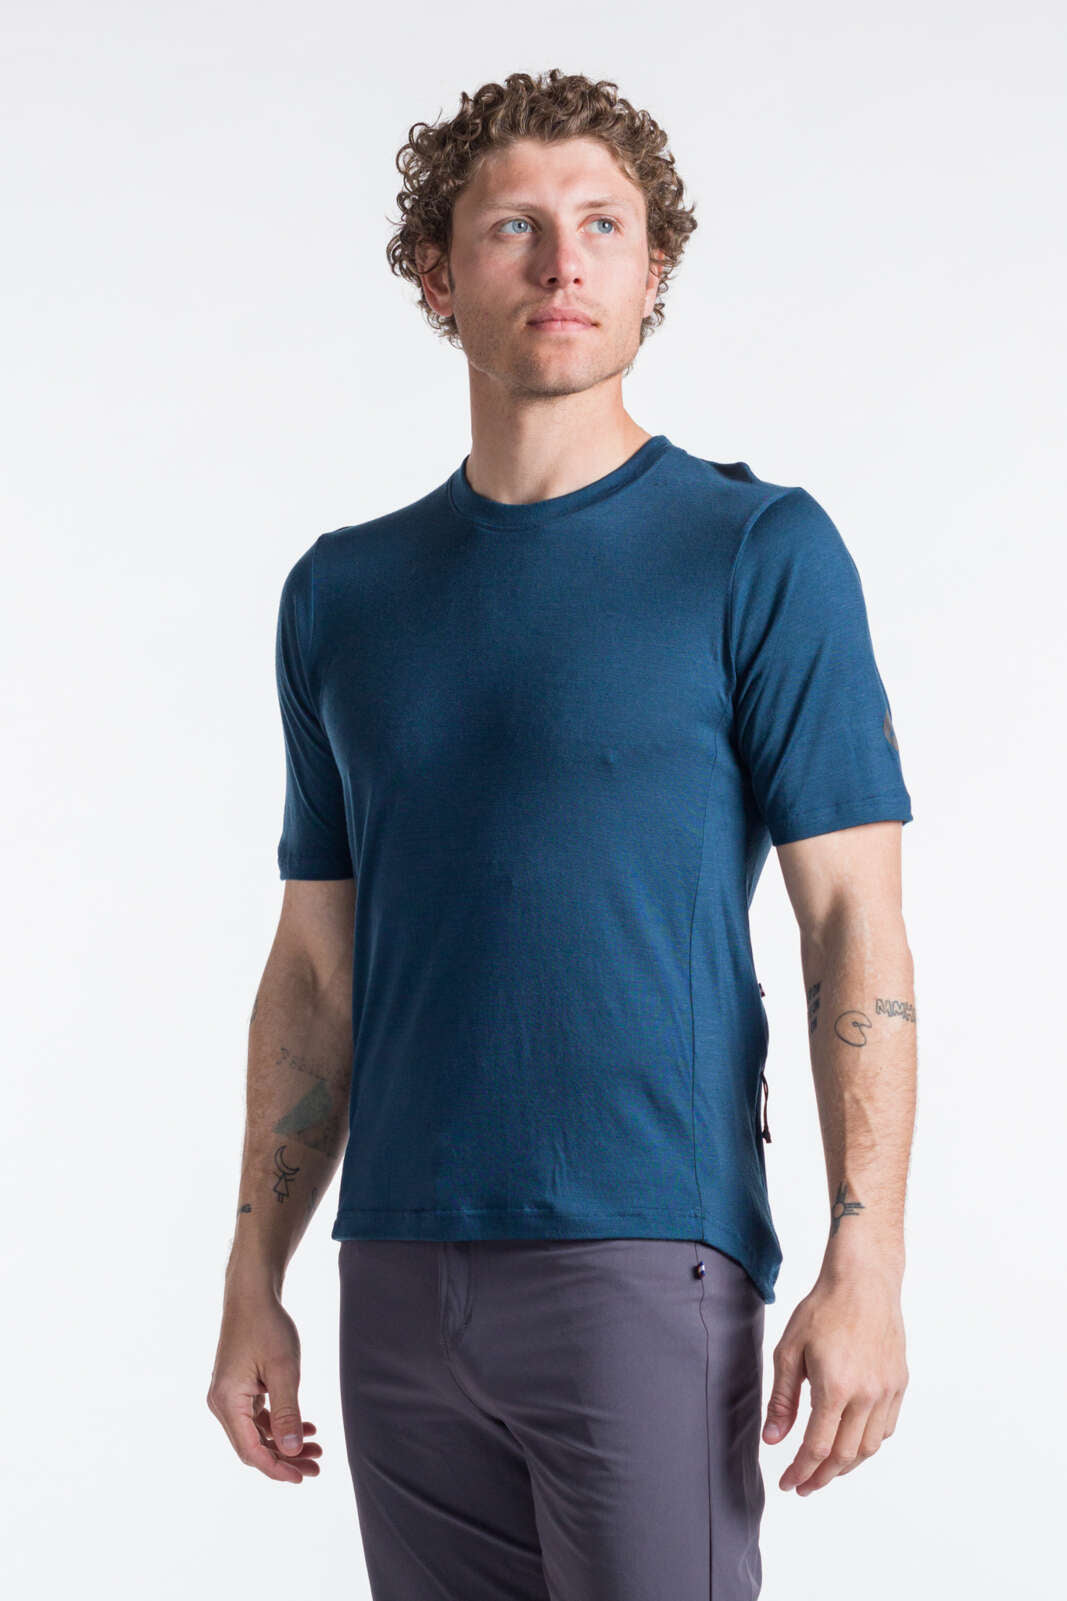 Men's Merino Wool MTB Shirt - Front View